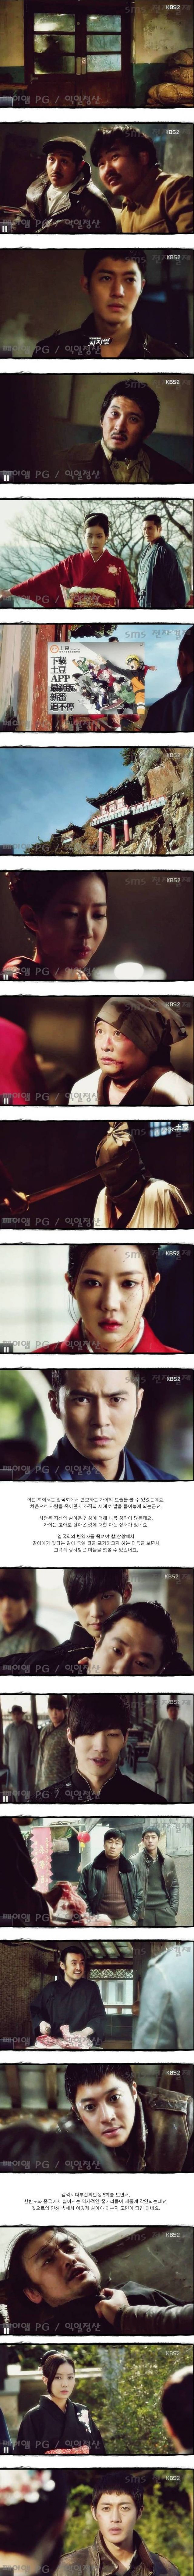 episode 5 captures for the Korean drama 'Inspiring Generation'